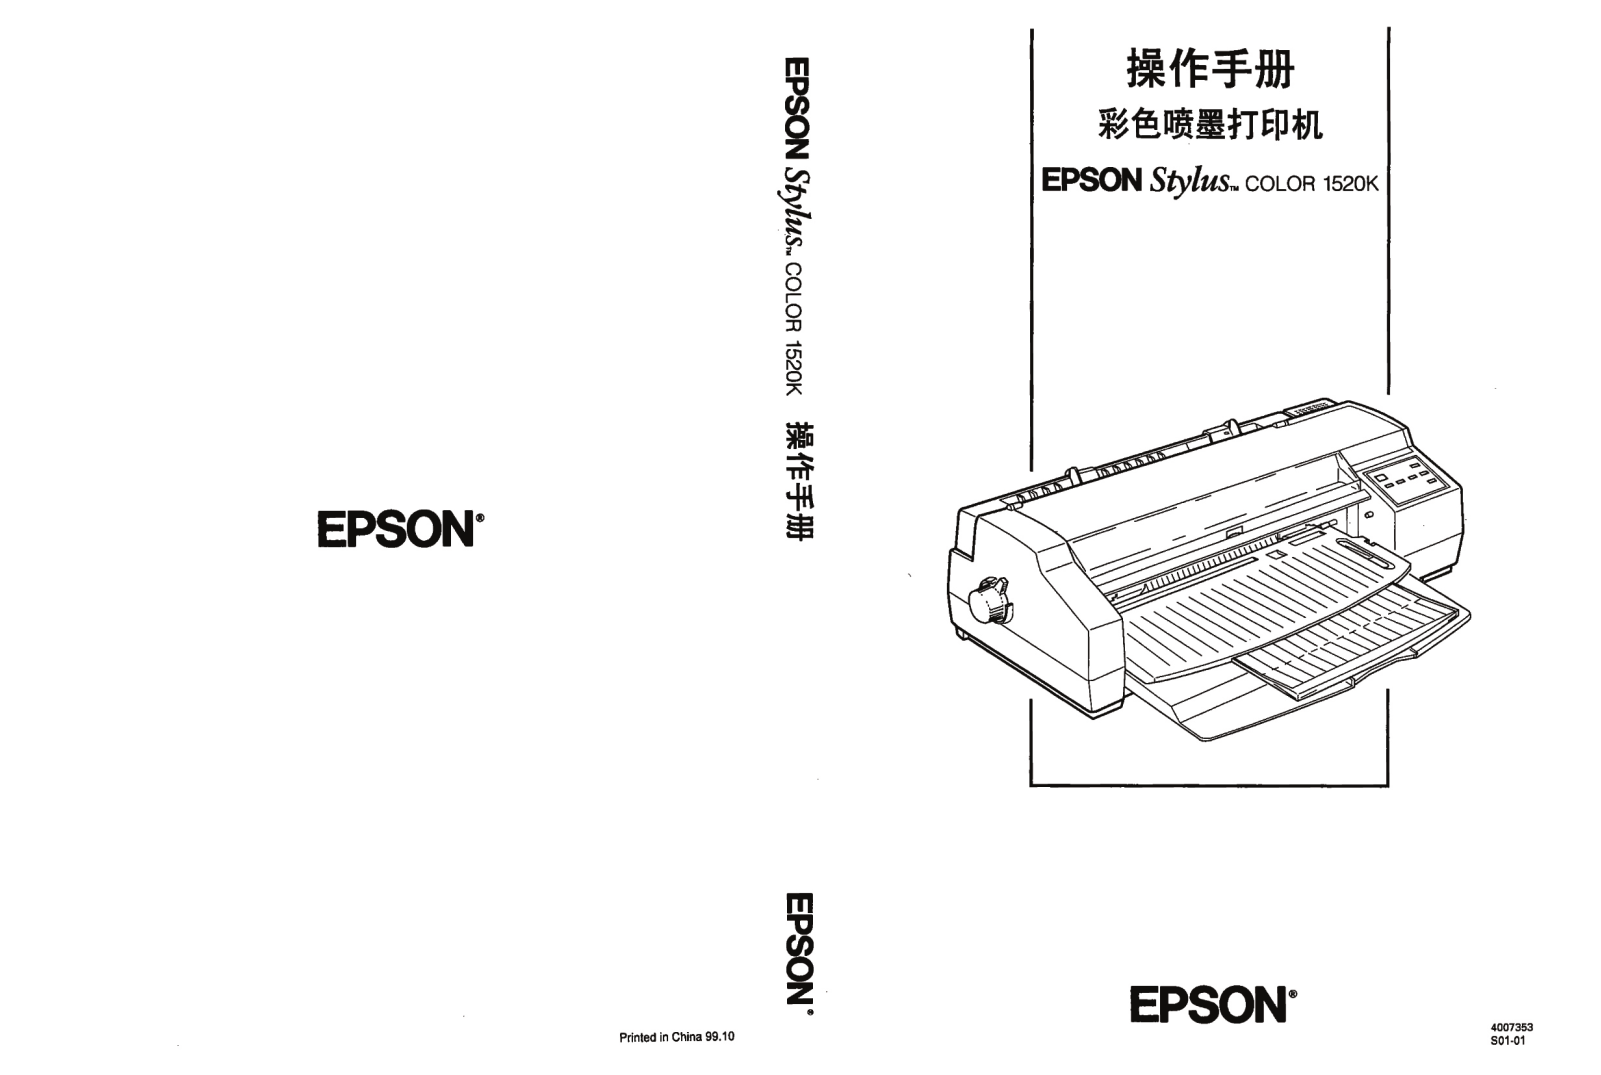 Epson STYLUS COLOR 1520K User Manual